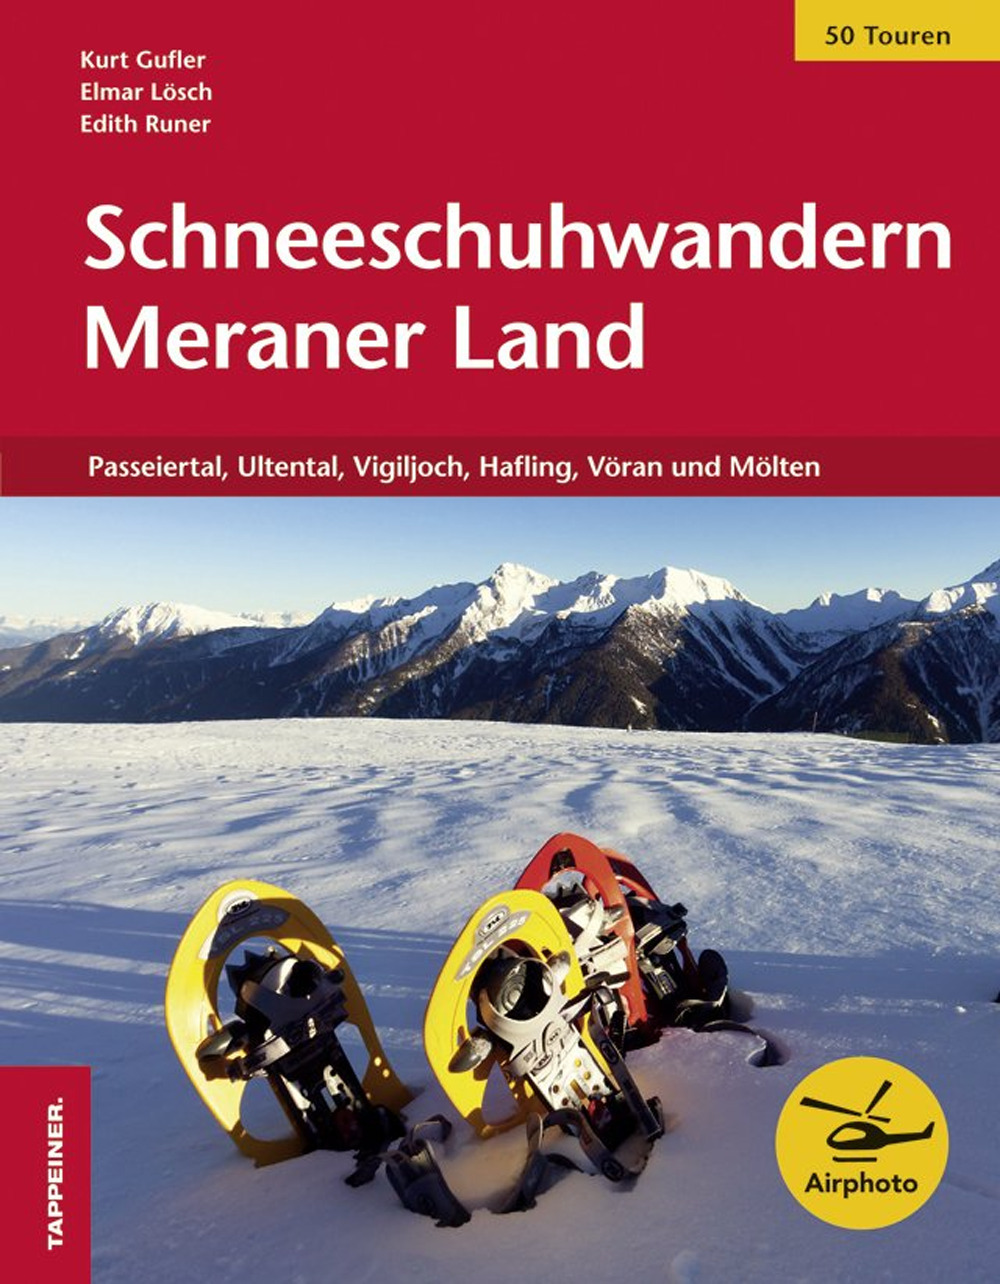 Schneeschuhwandern Meraner Land. Passeiertal, Ultental, Vigiljoch, Hafling, Vöran und Mölten